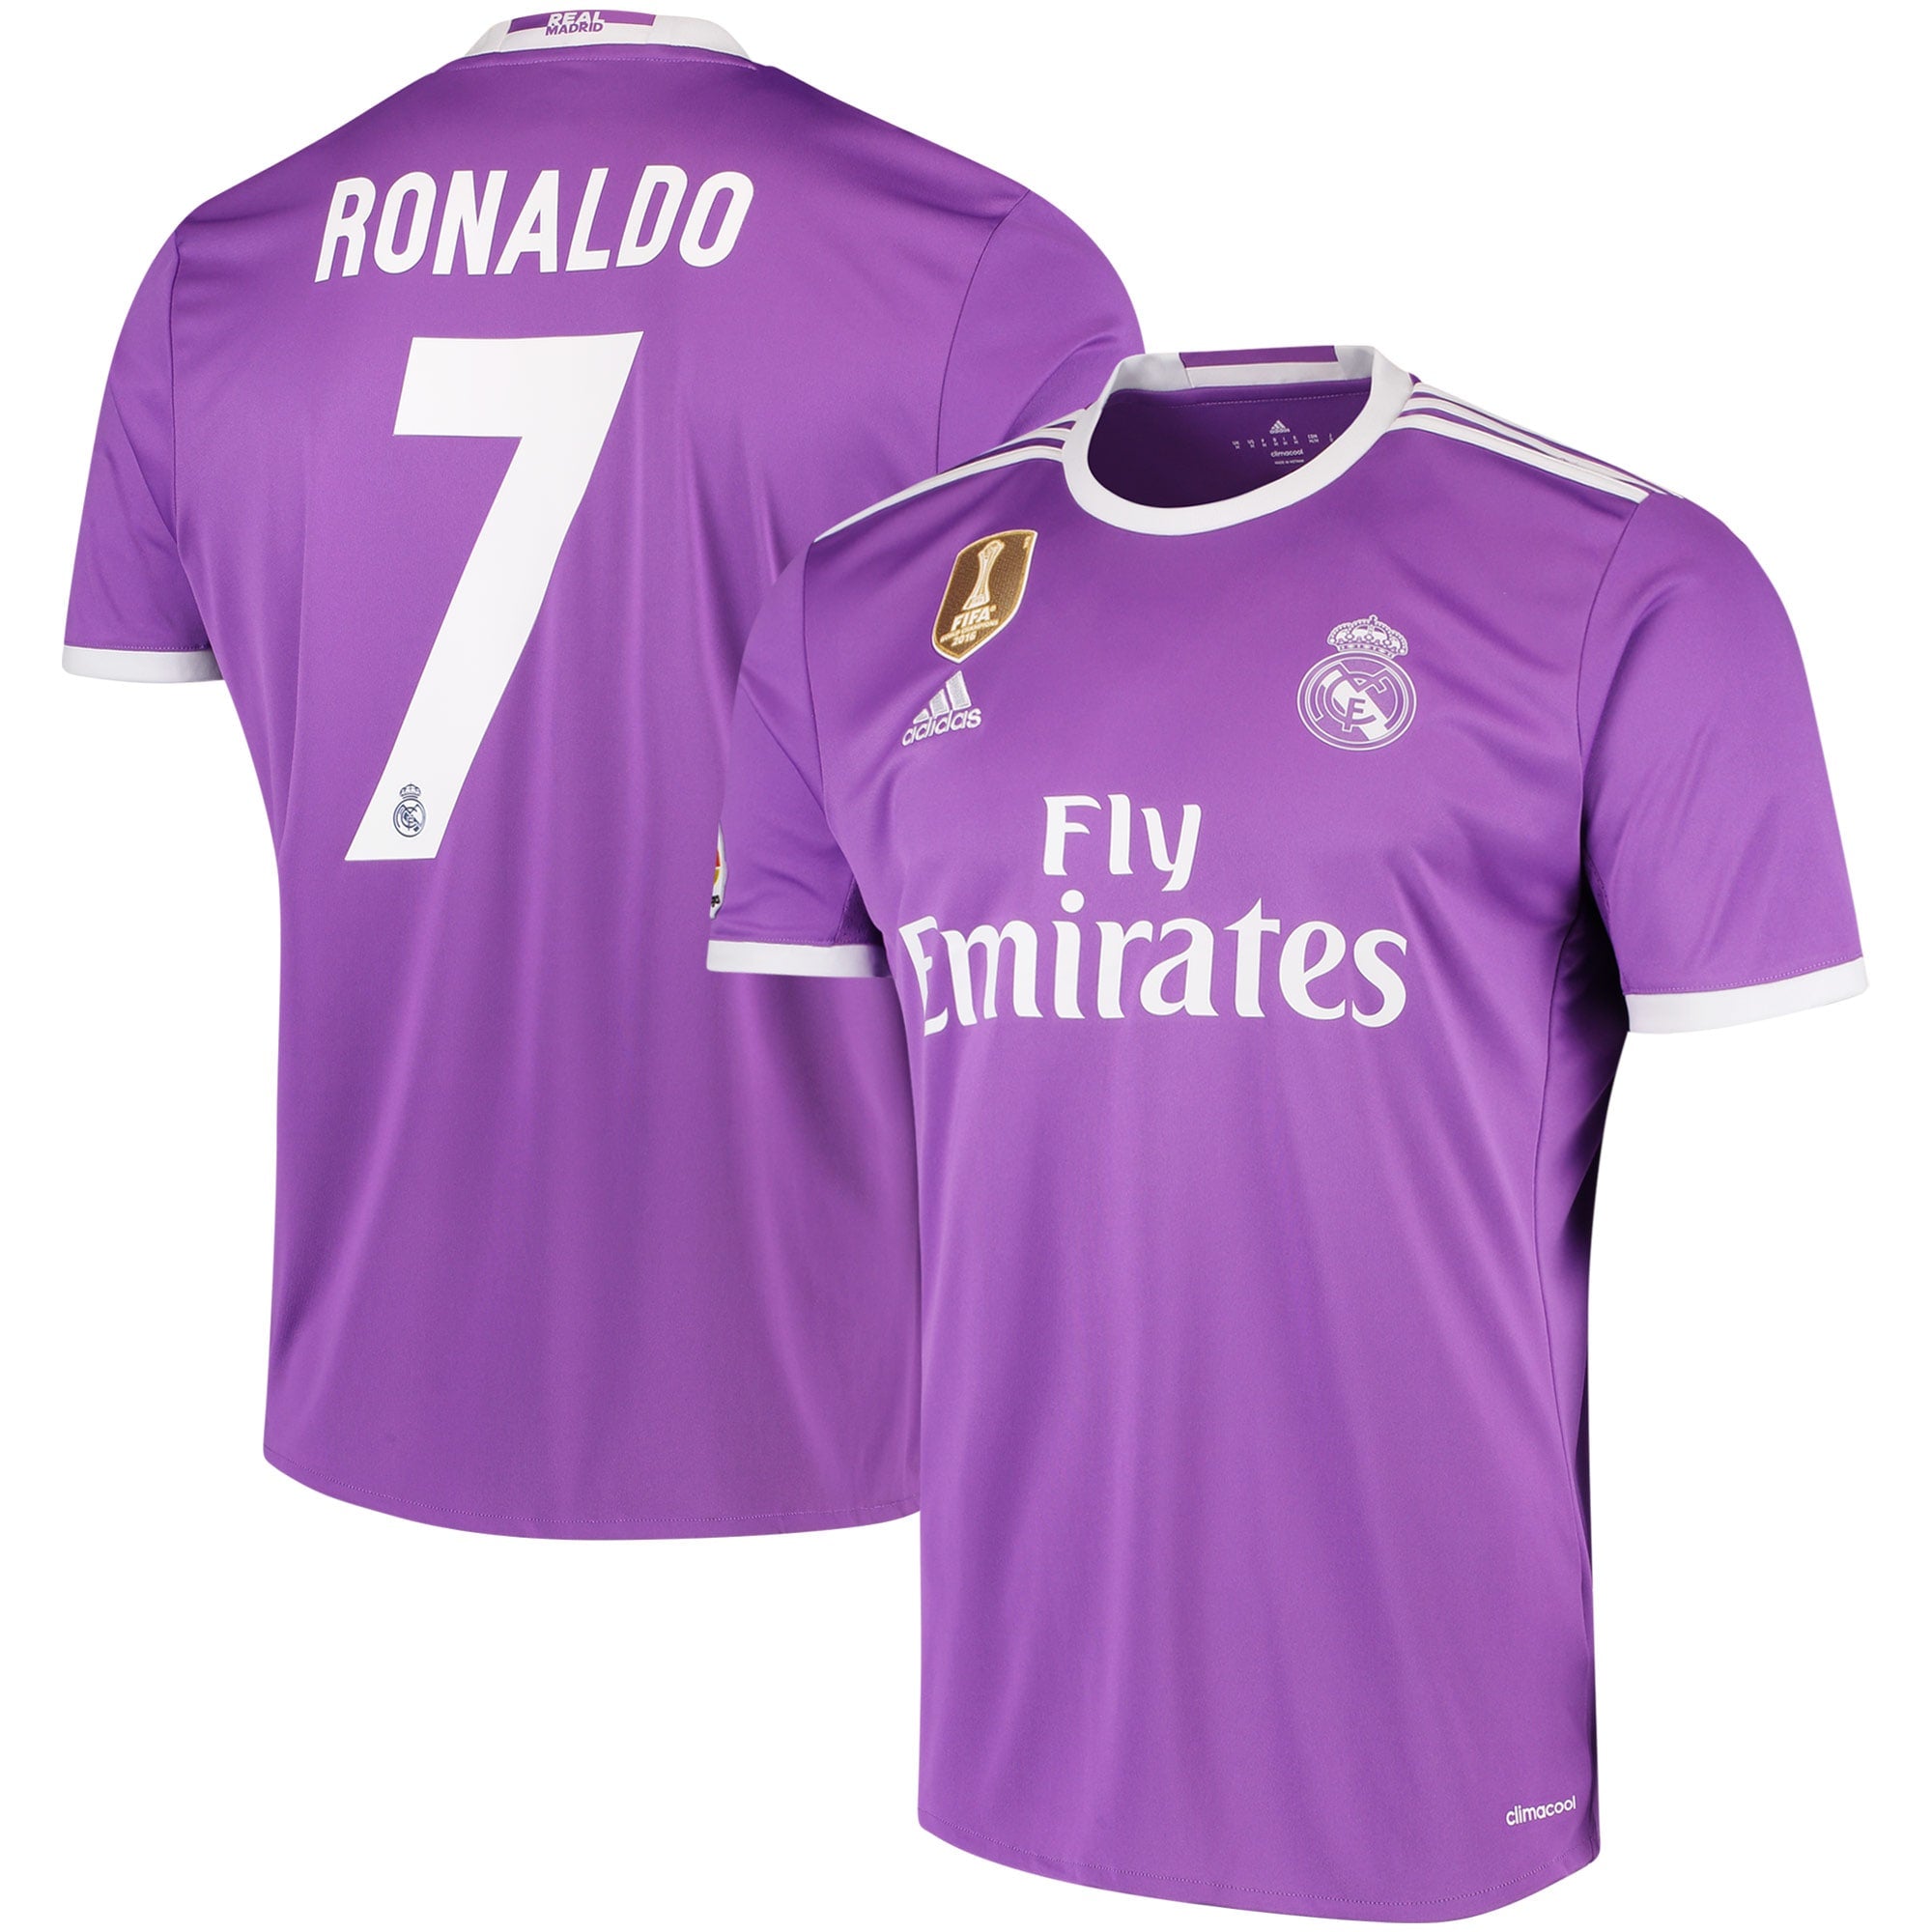 RONALDO #7 Real Madrid Away 2016/17